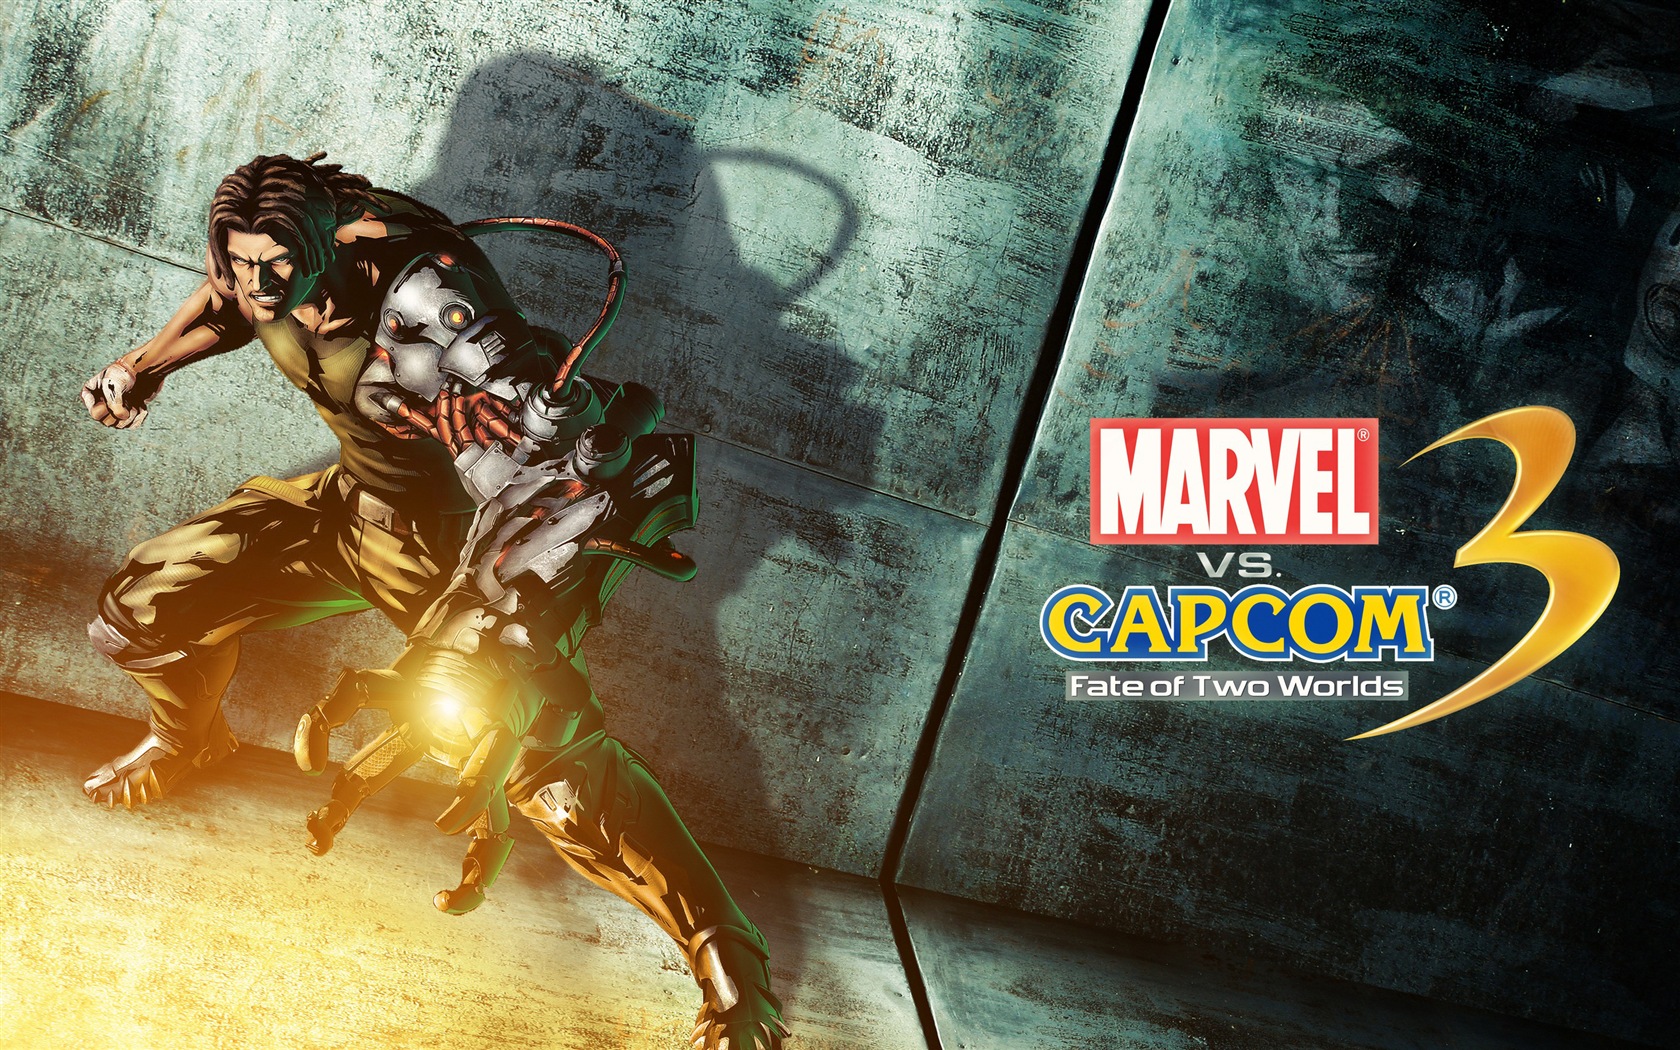 Marvel VS. Capcom 3: Fate of Two Worlds 漫画英雄VS.卡普空3 高清游戏壁纸8 - 1680x1050